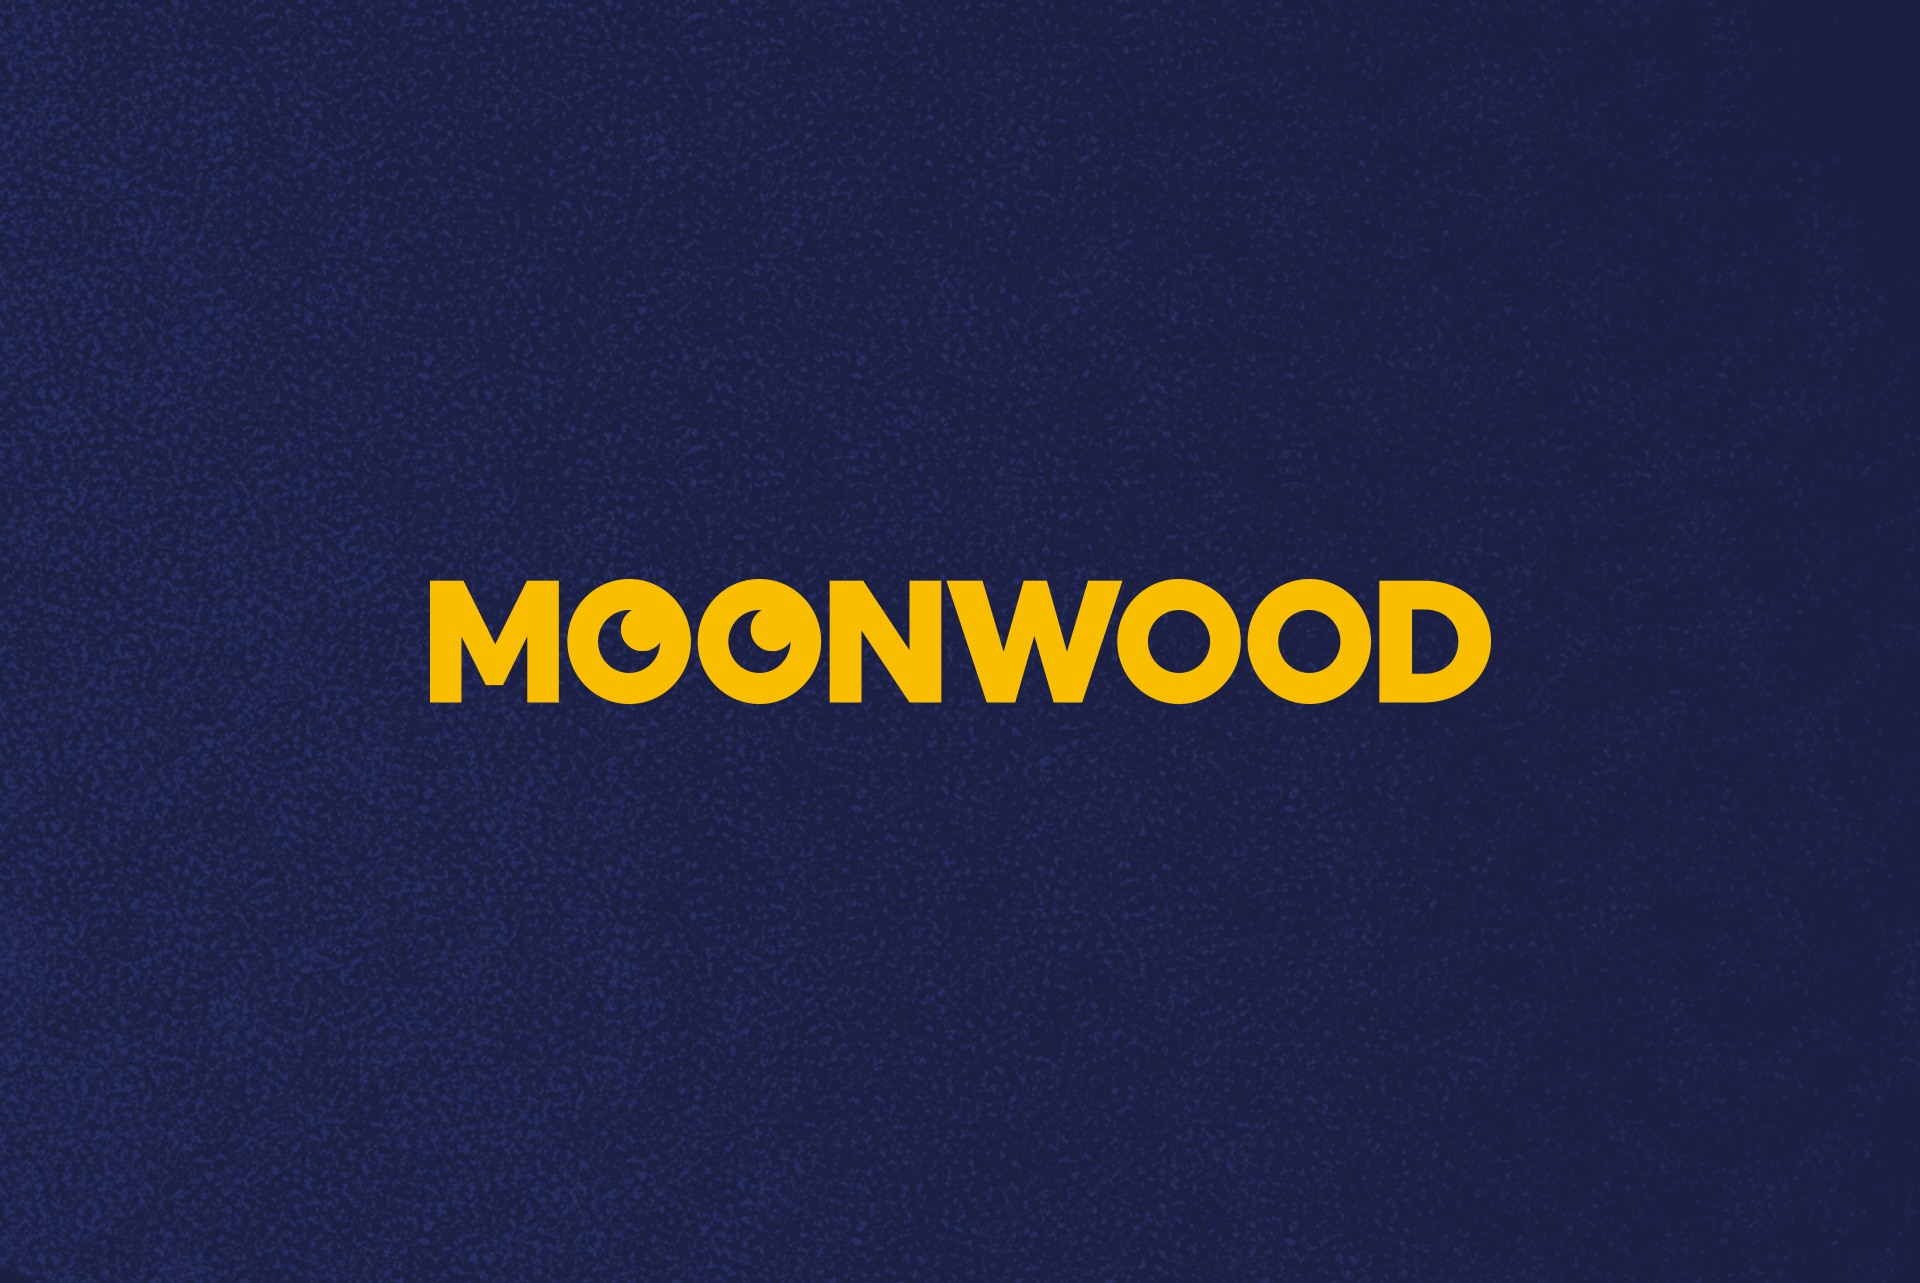 Moonwood books